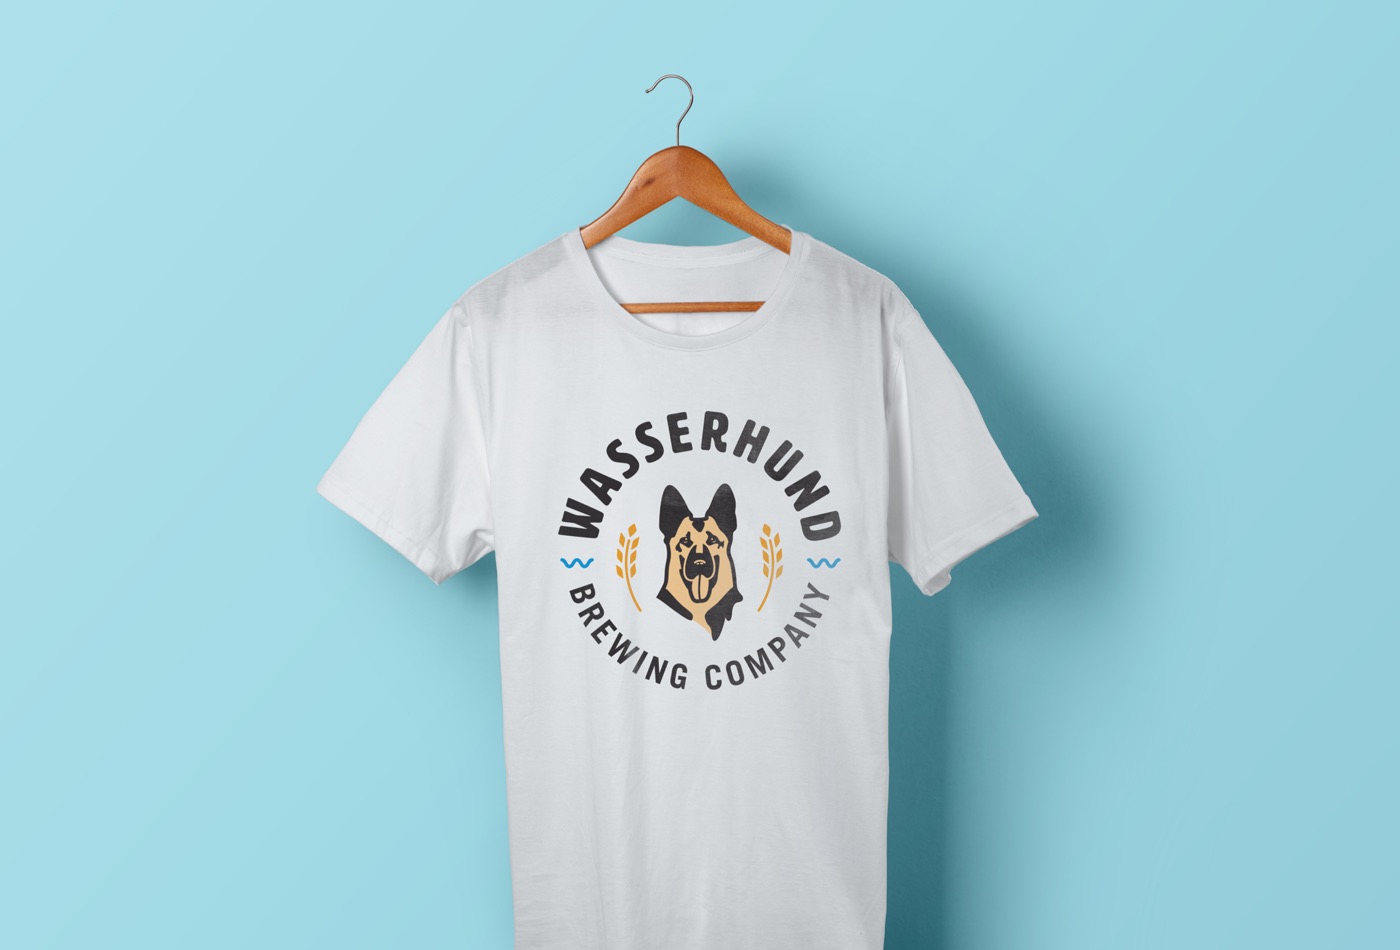 Wasserhund Brewing Company T-Shirt Design